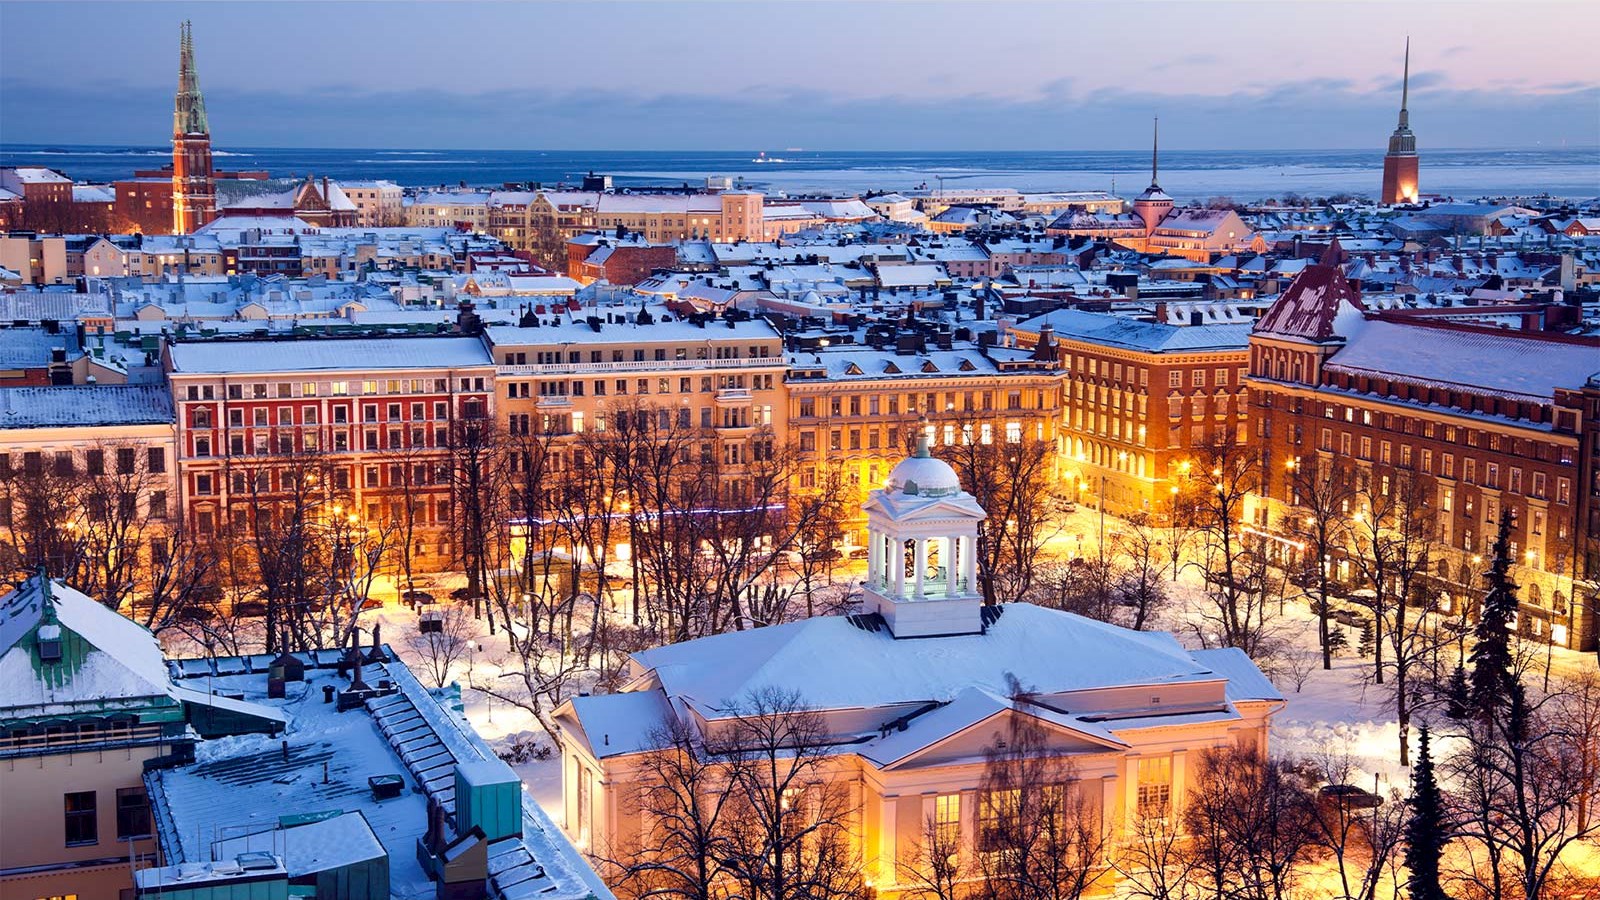 Helsinki Finland city skyline snow evening night lights winter tax conference